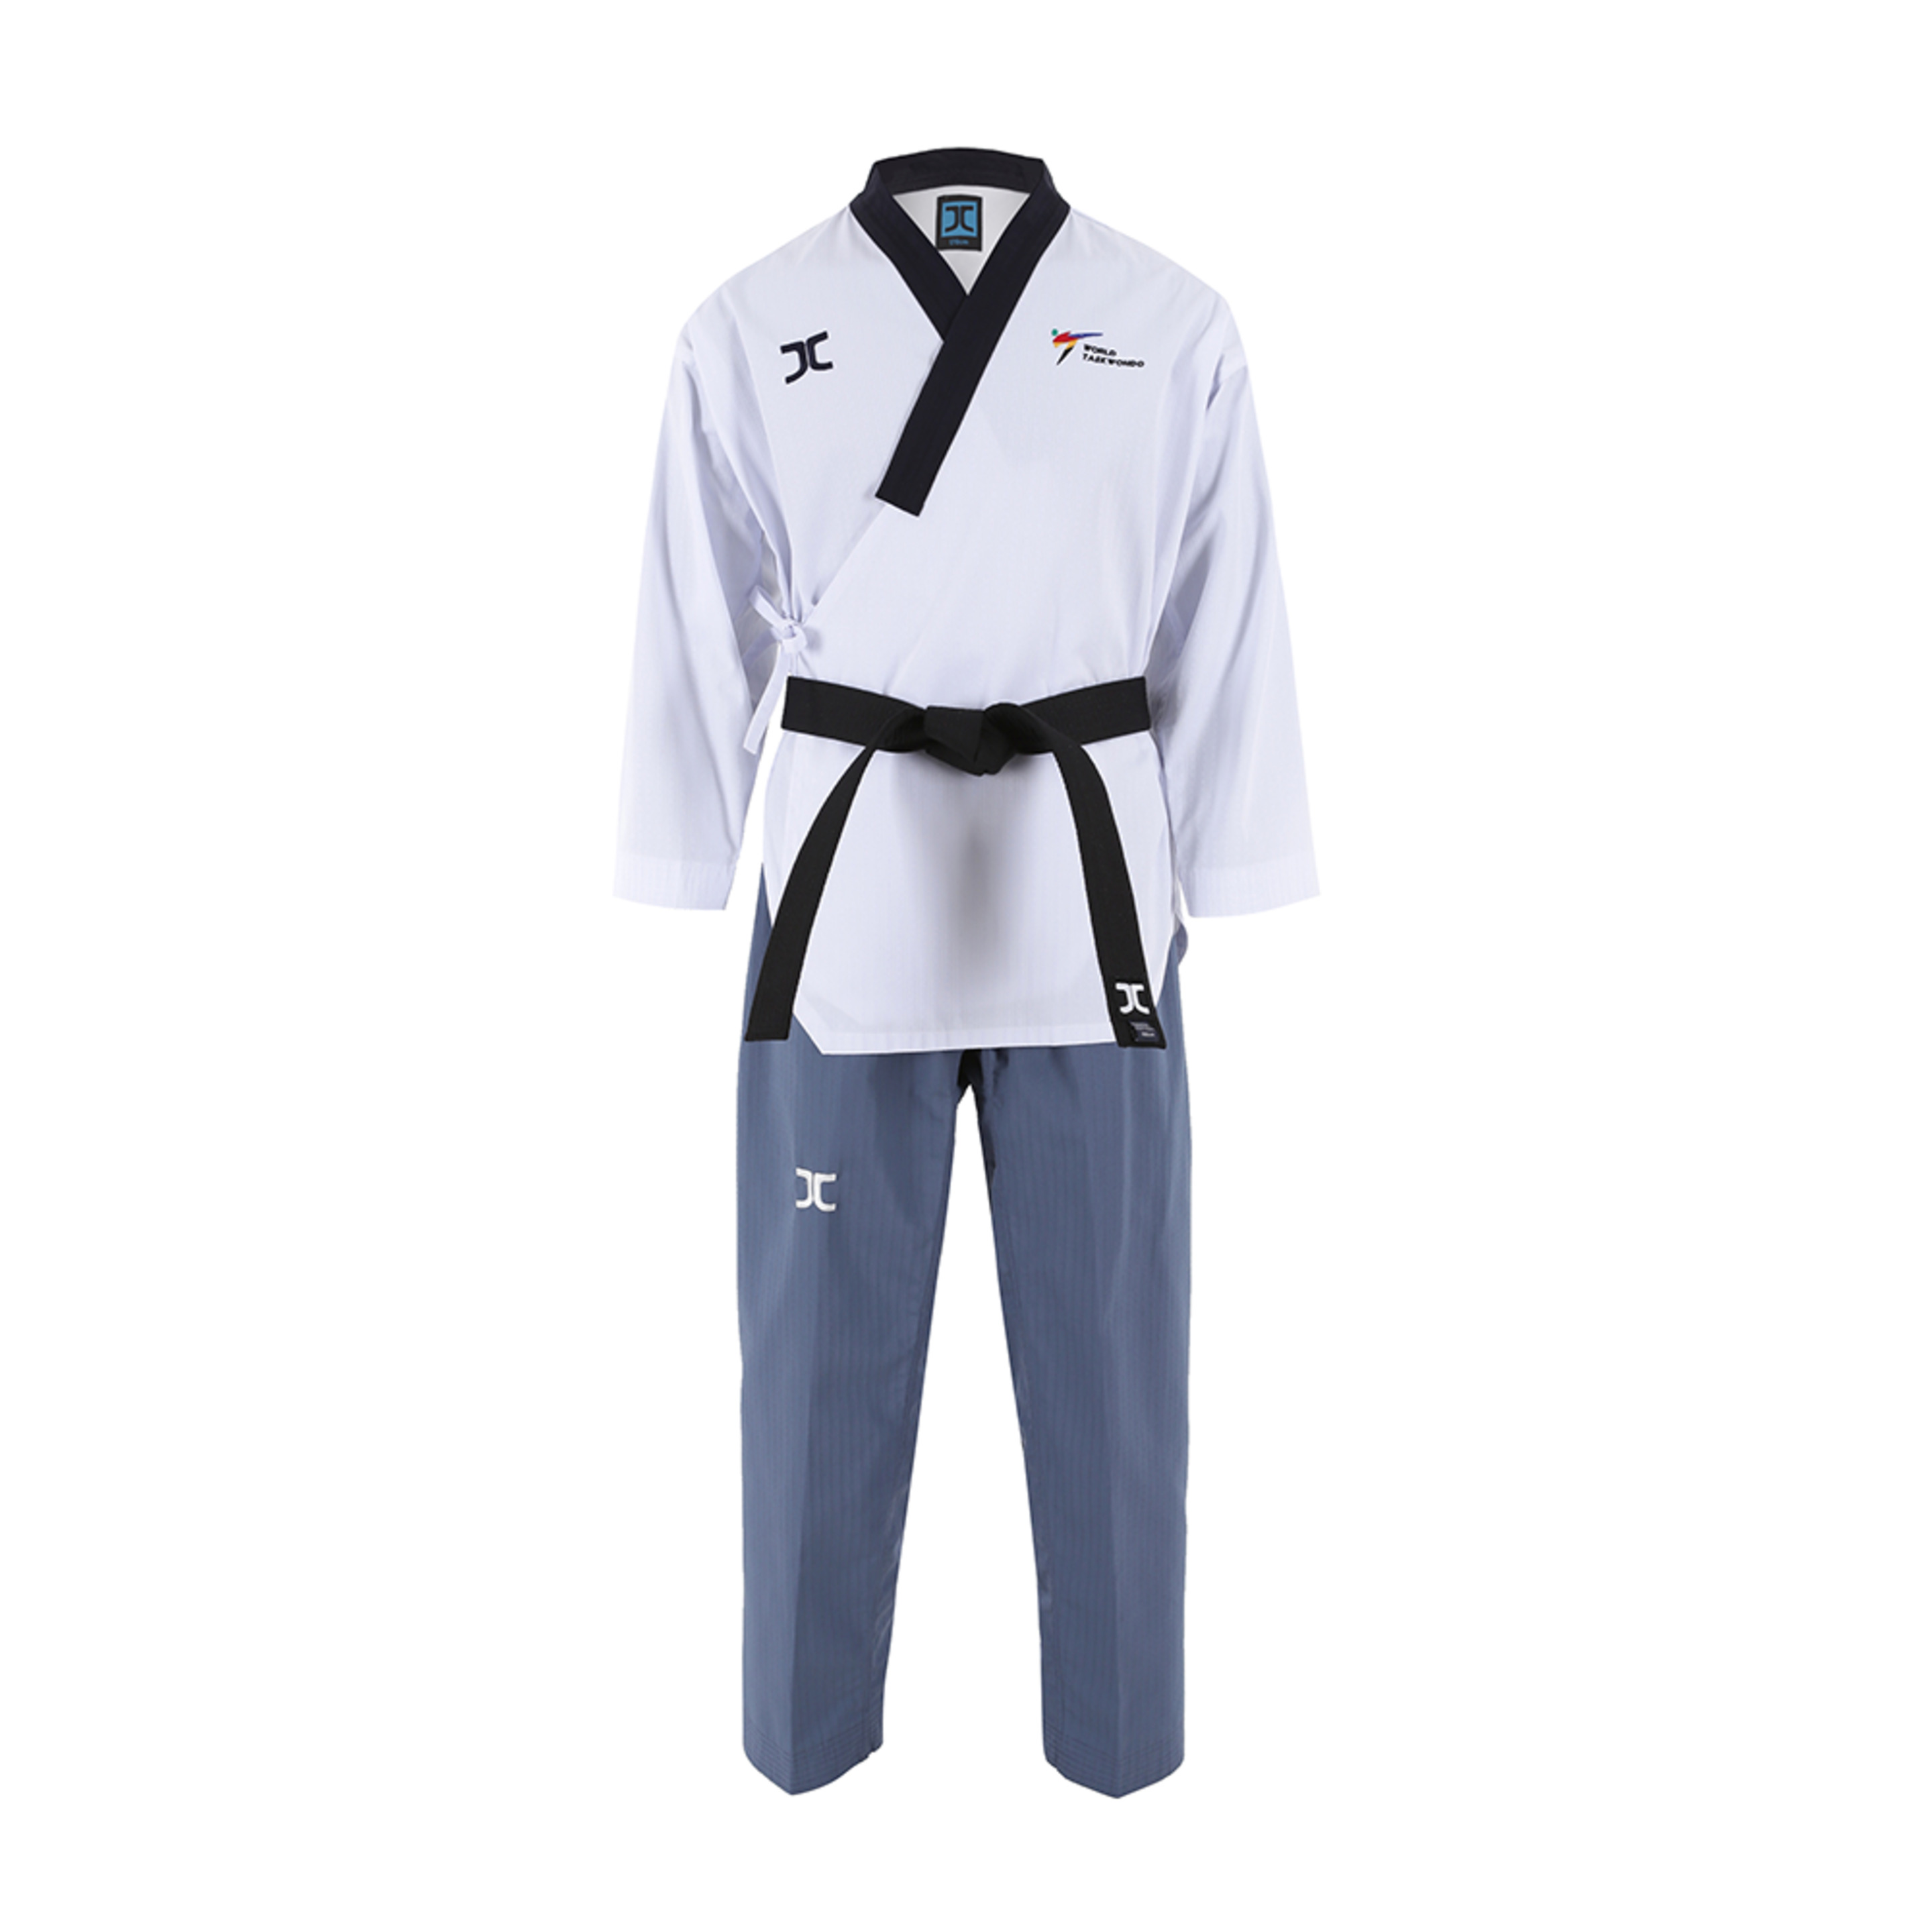 Traje De Taekwondo Jcalicu Poomsae Dan - blanco-azul - 